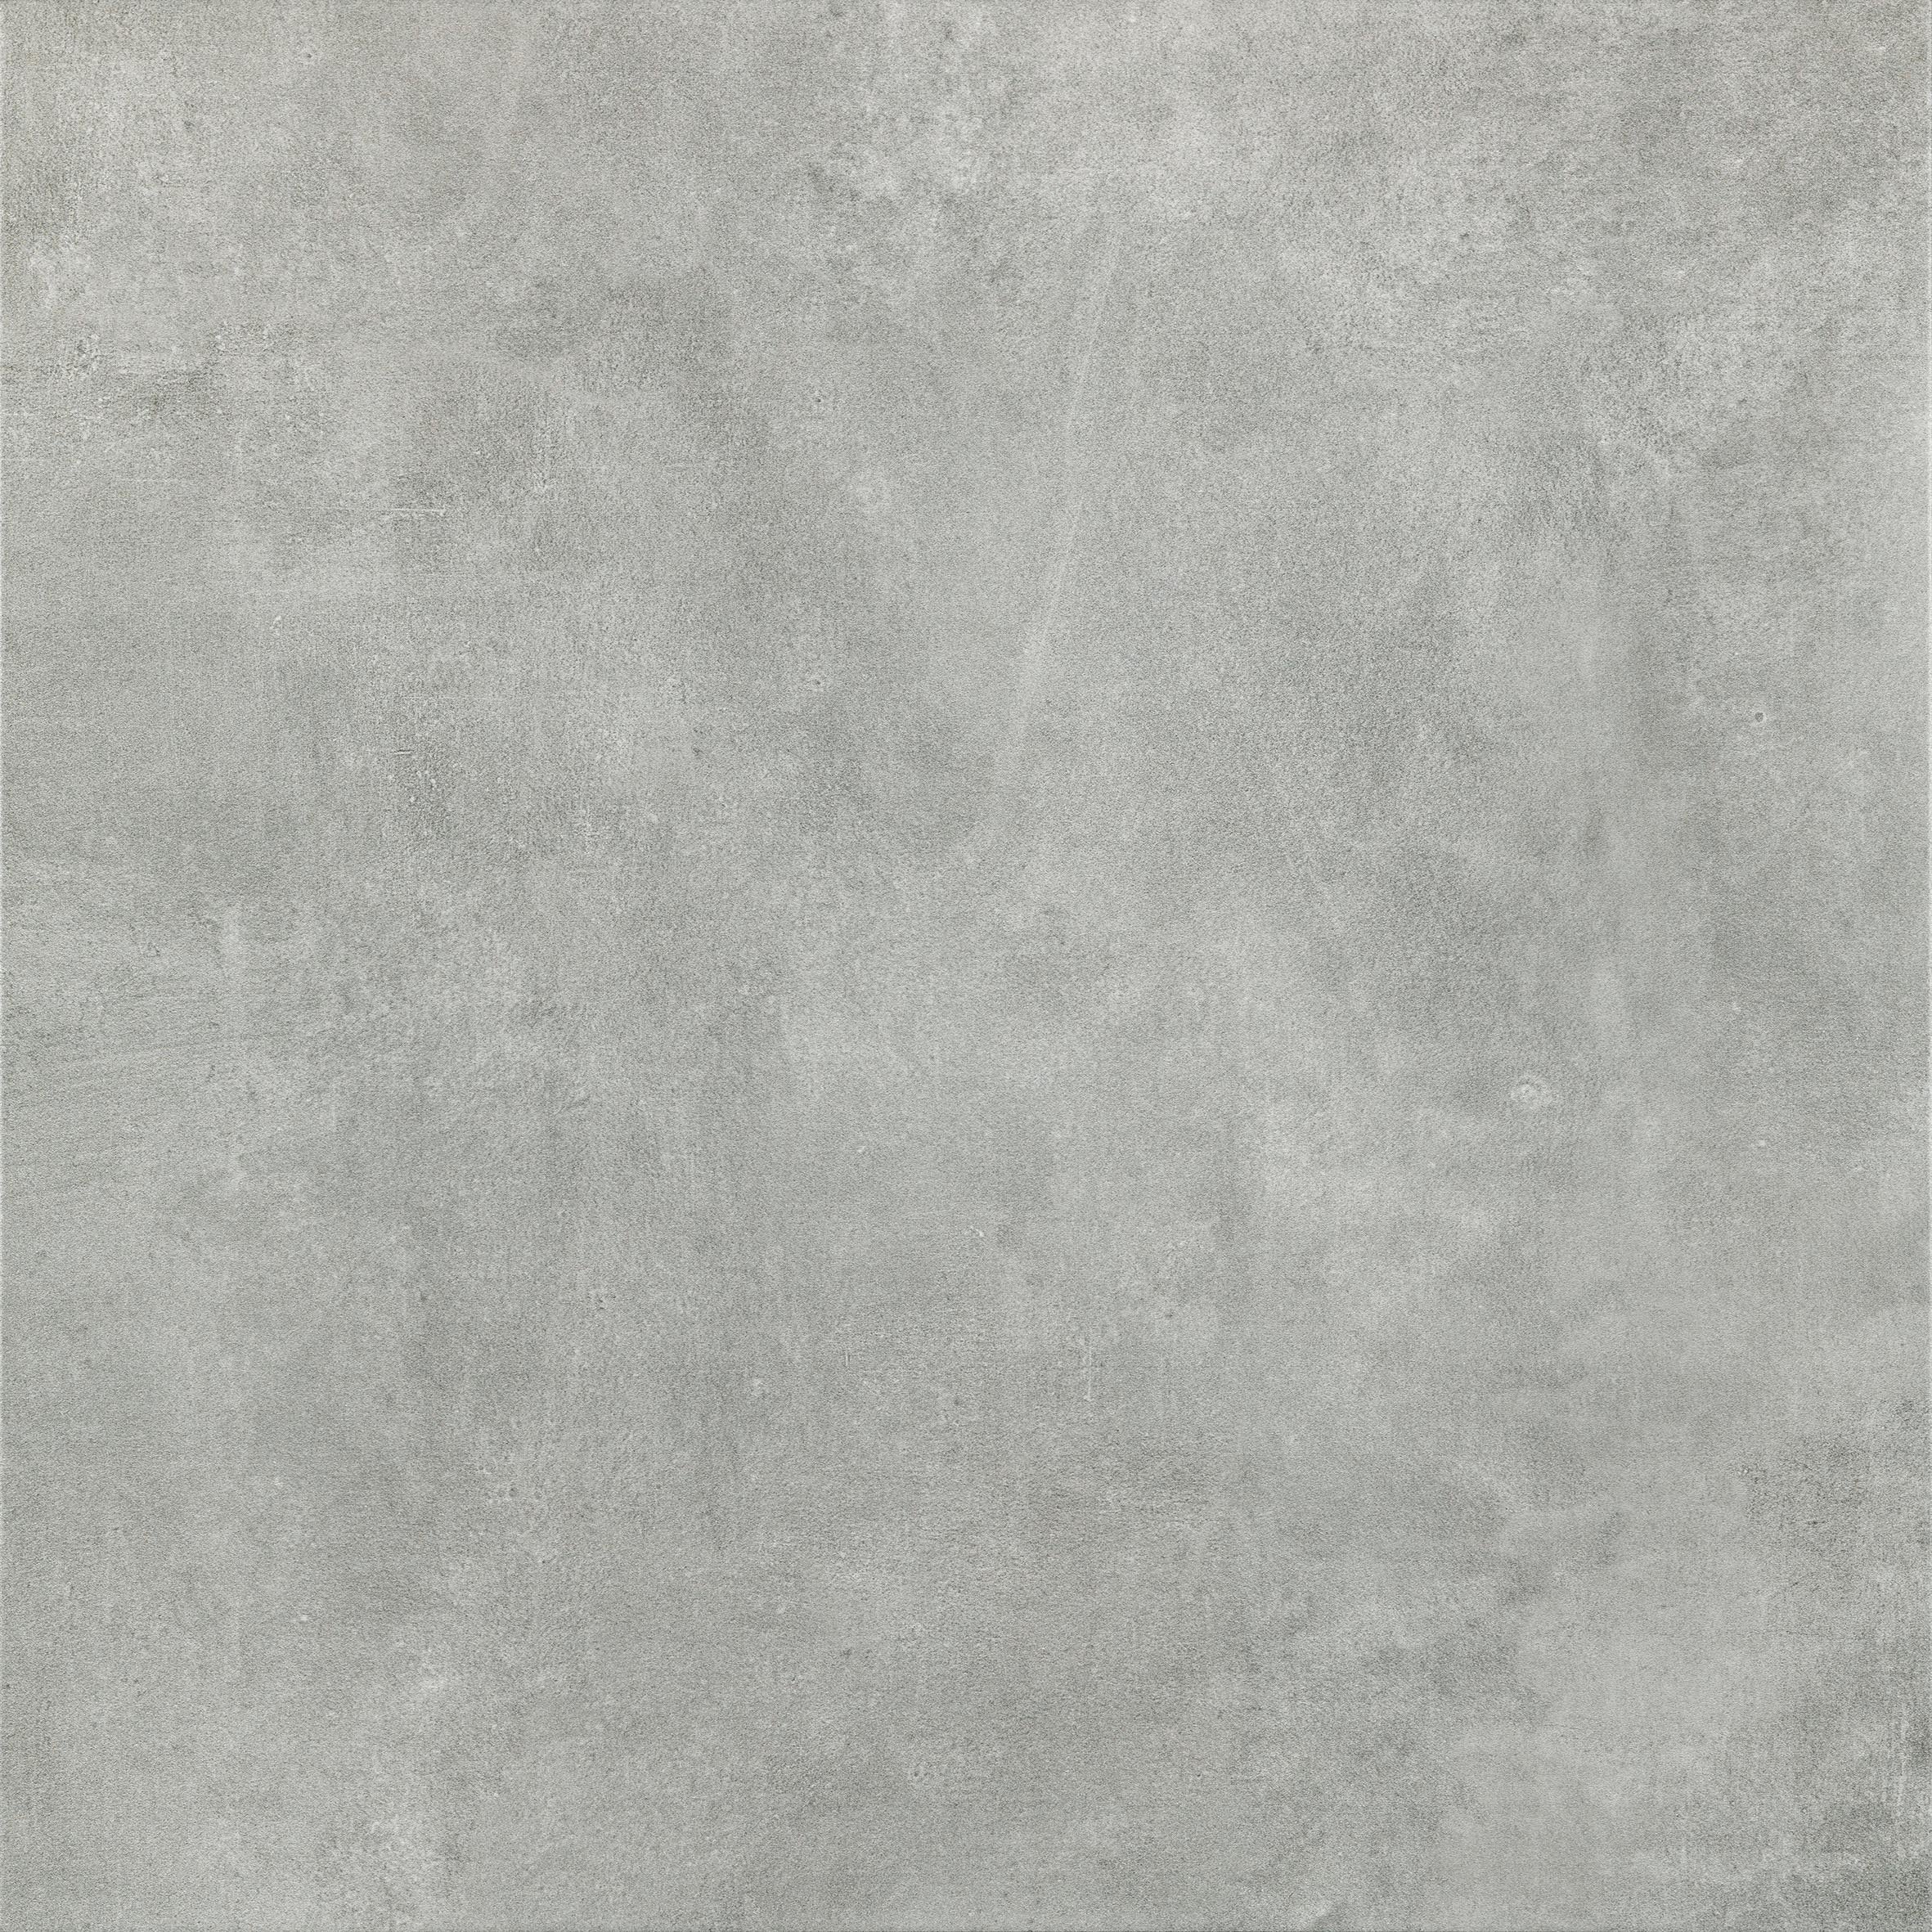 CONCRETE - Light grey